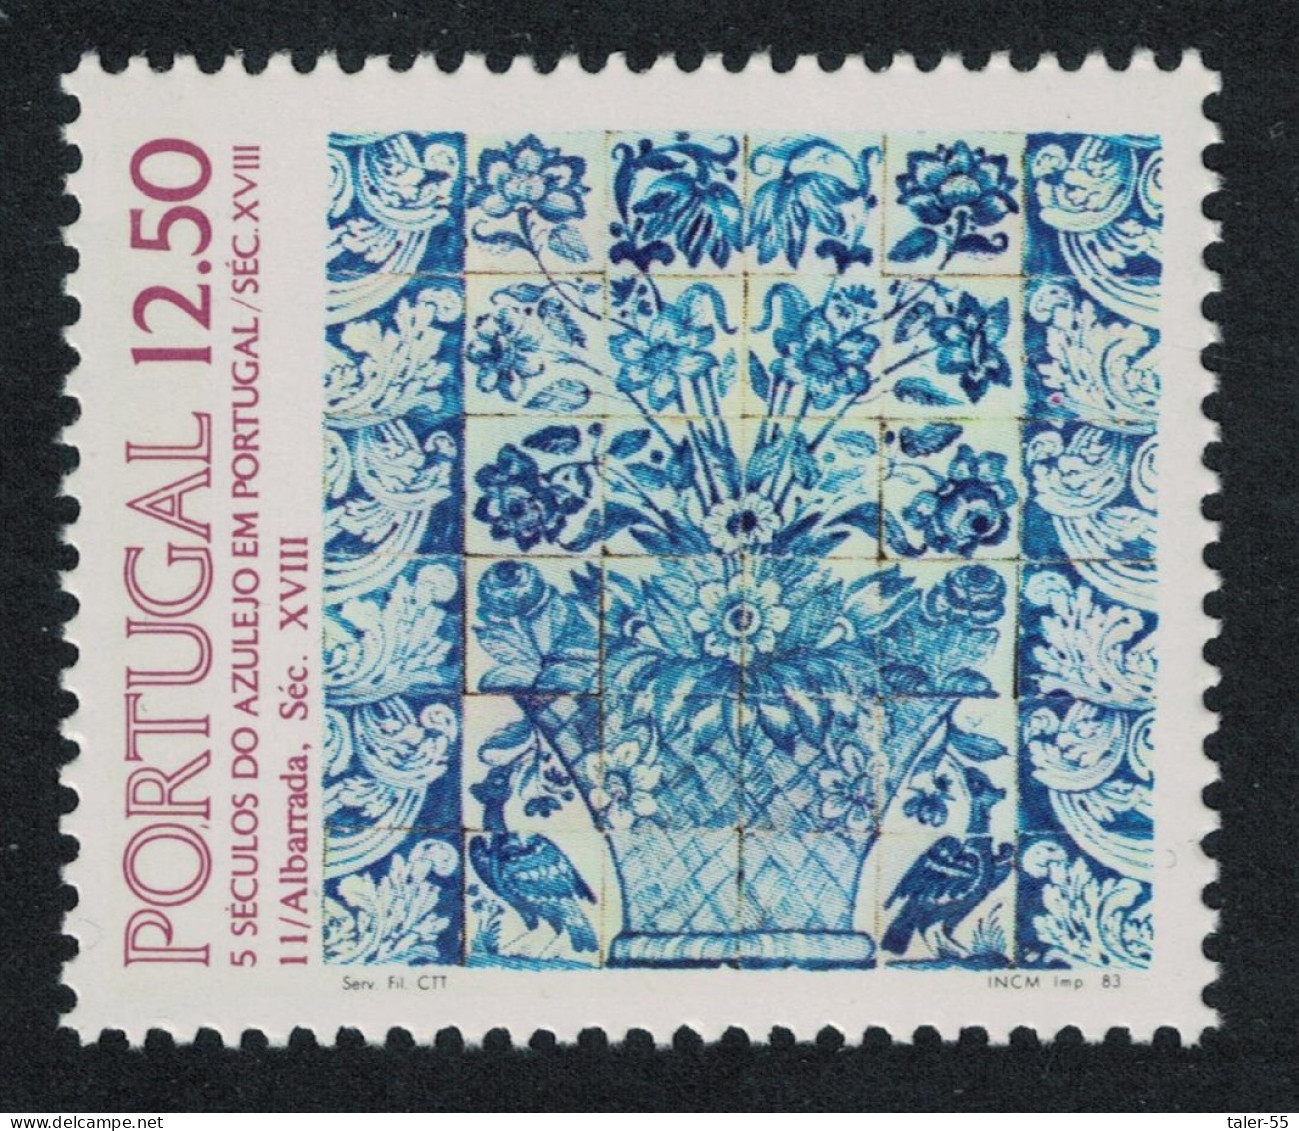 Portugal Tiles 11th Series 1983 MNH SG#1935 - Nuovi